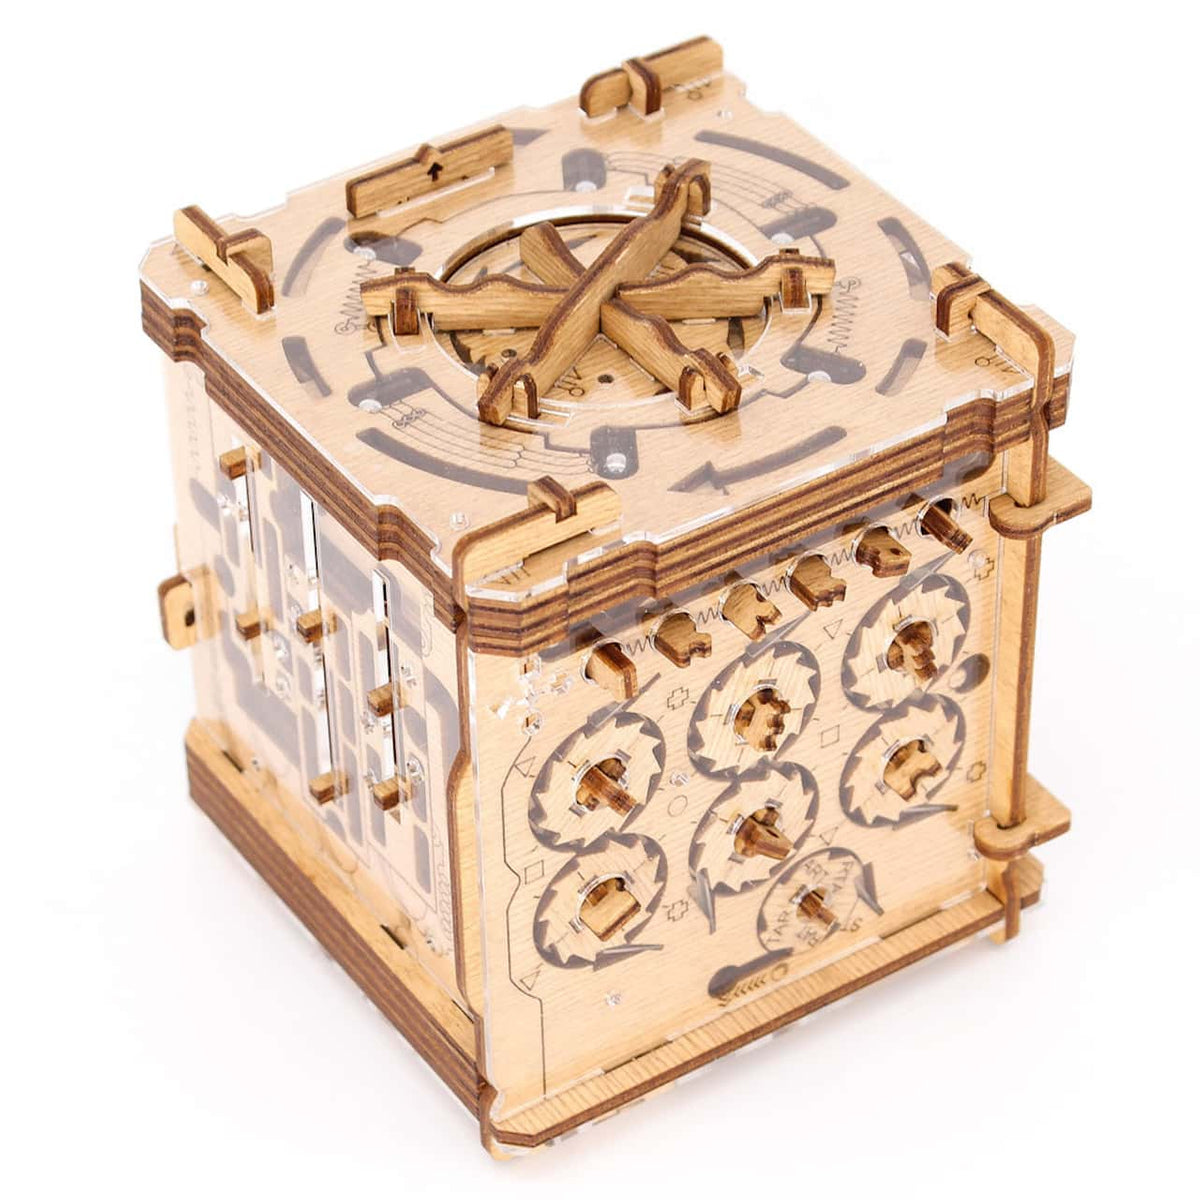 Cluebox - Escape Room in einer Box. Cambridge Labyrinth